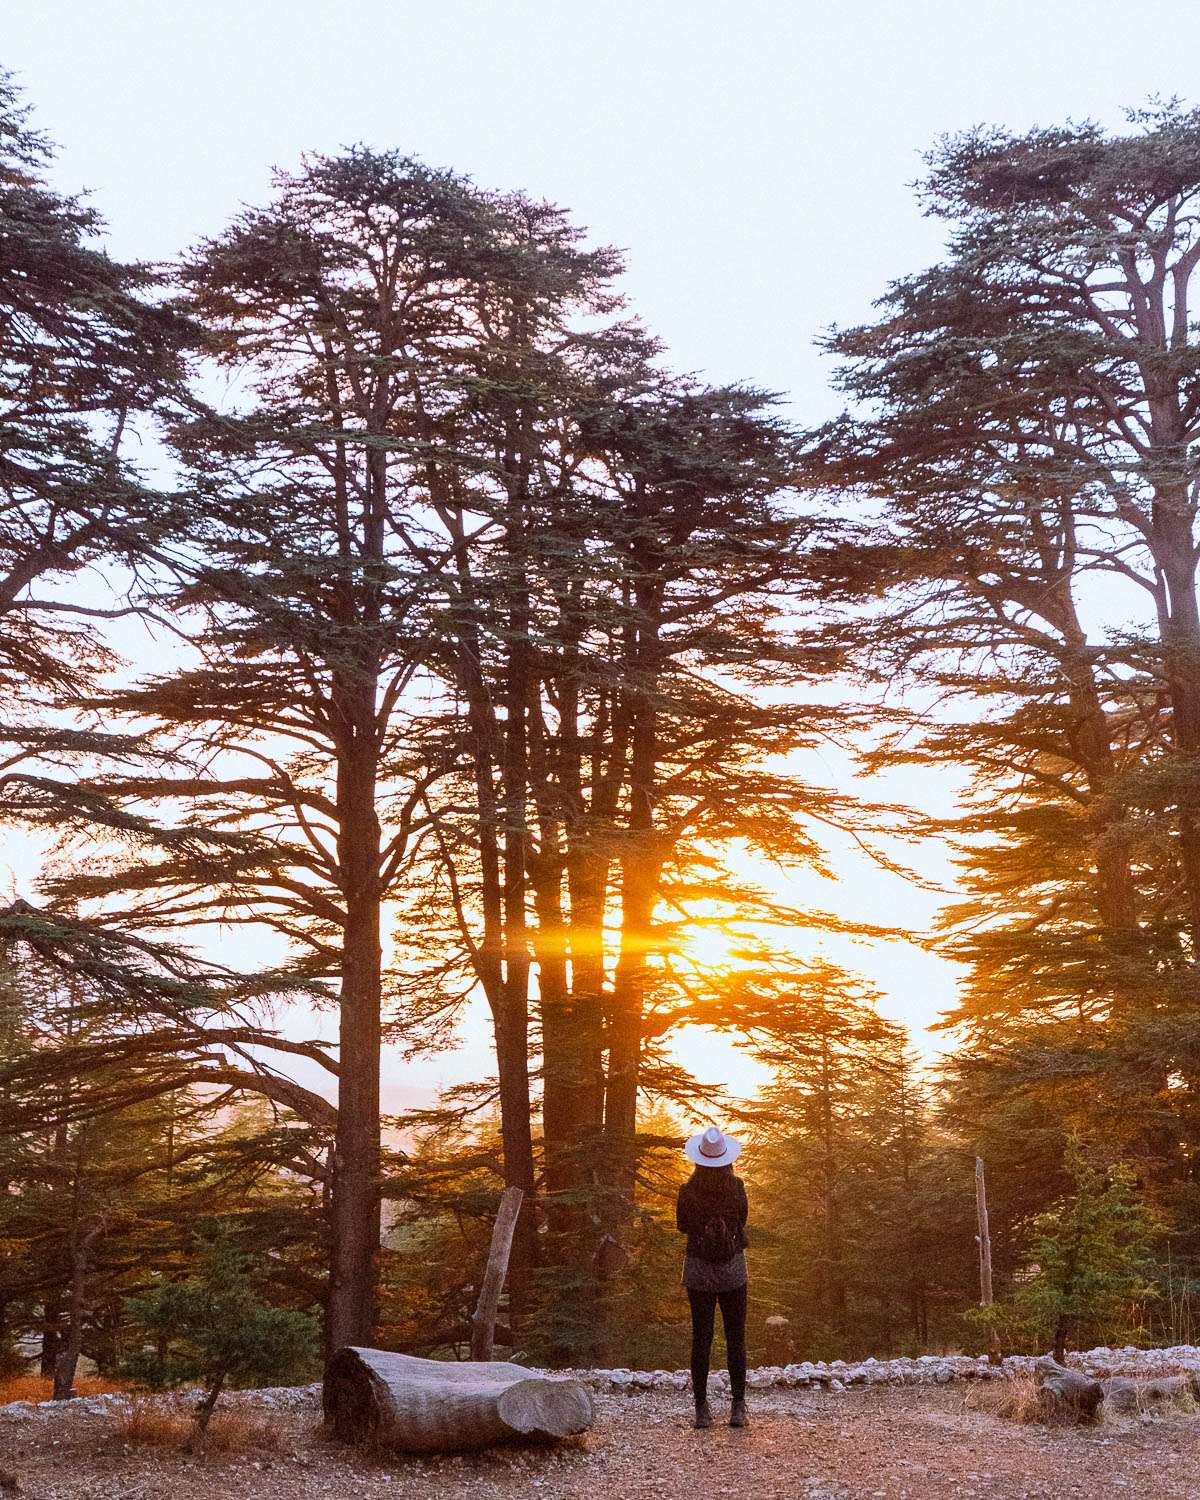 The Cedars of God, Lebanon